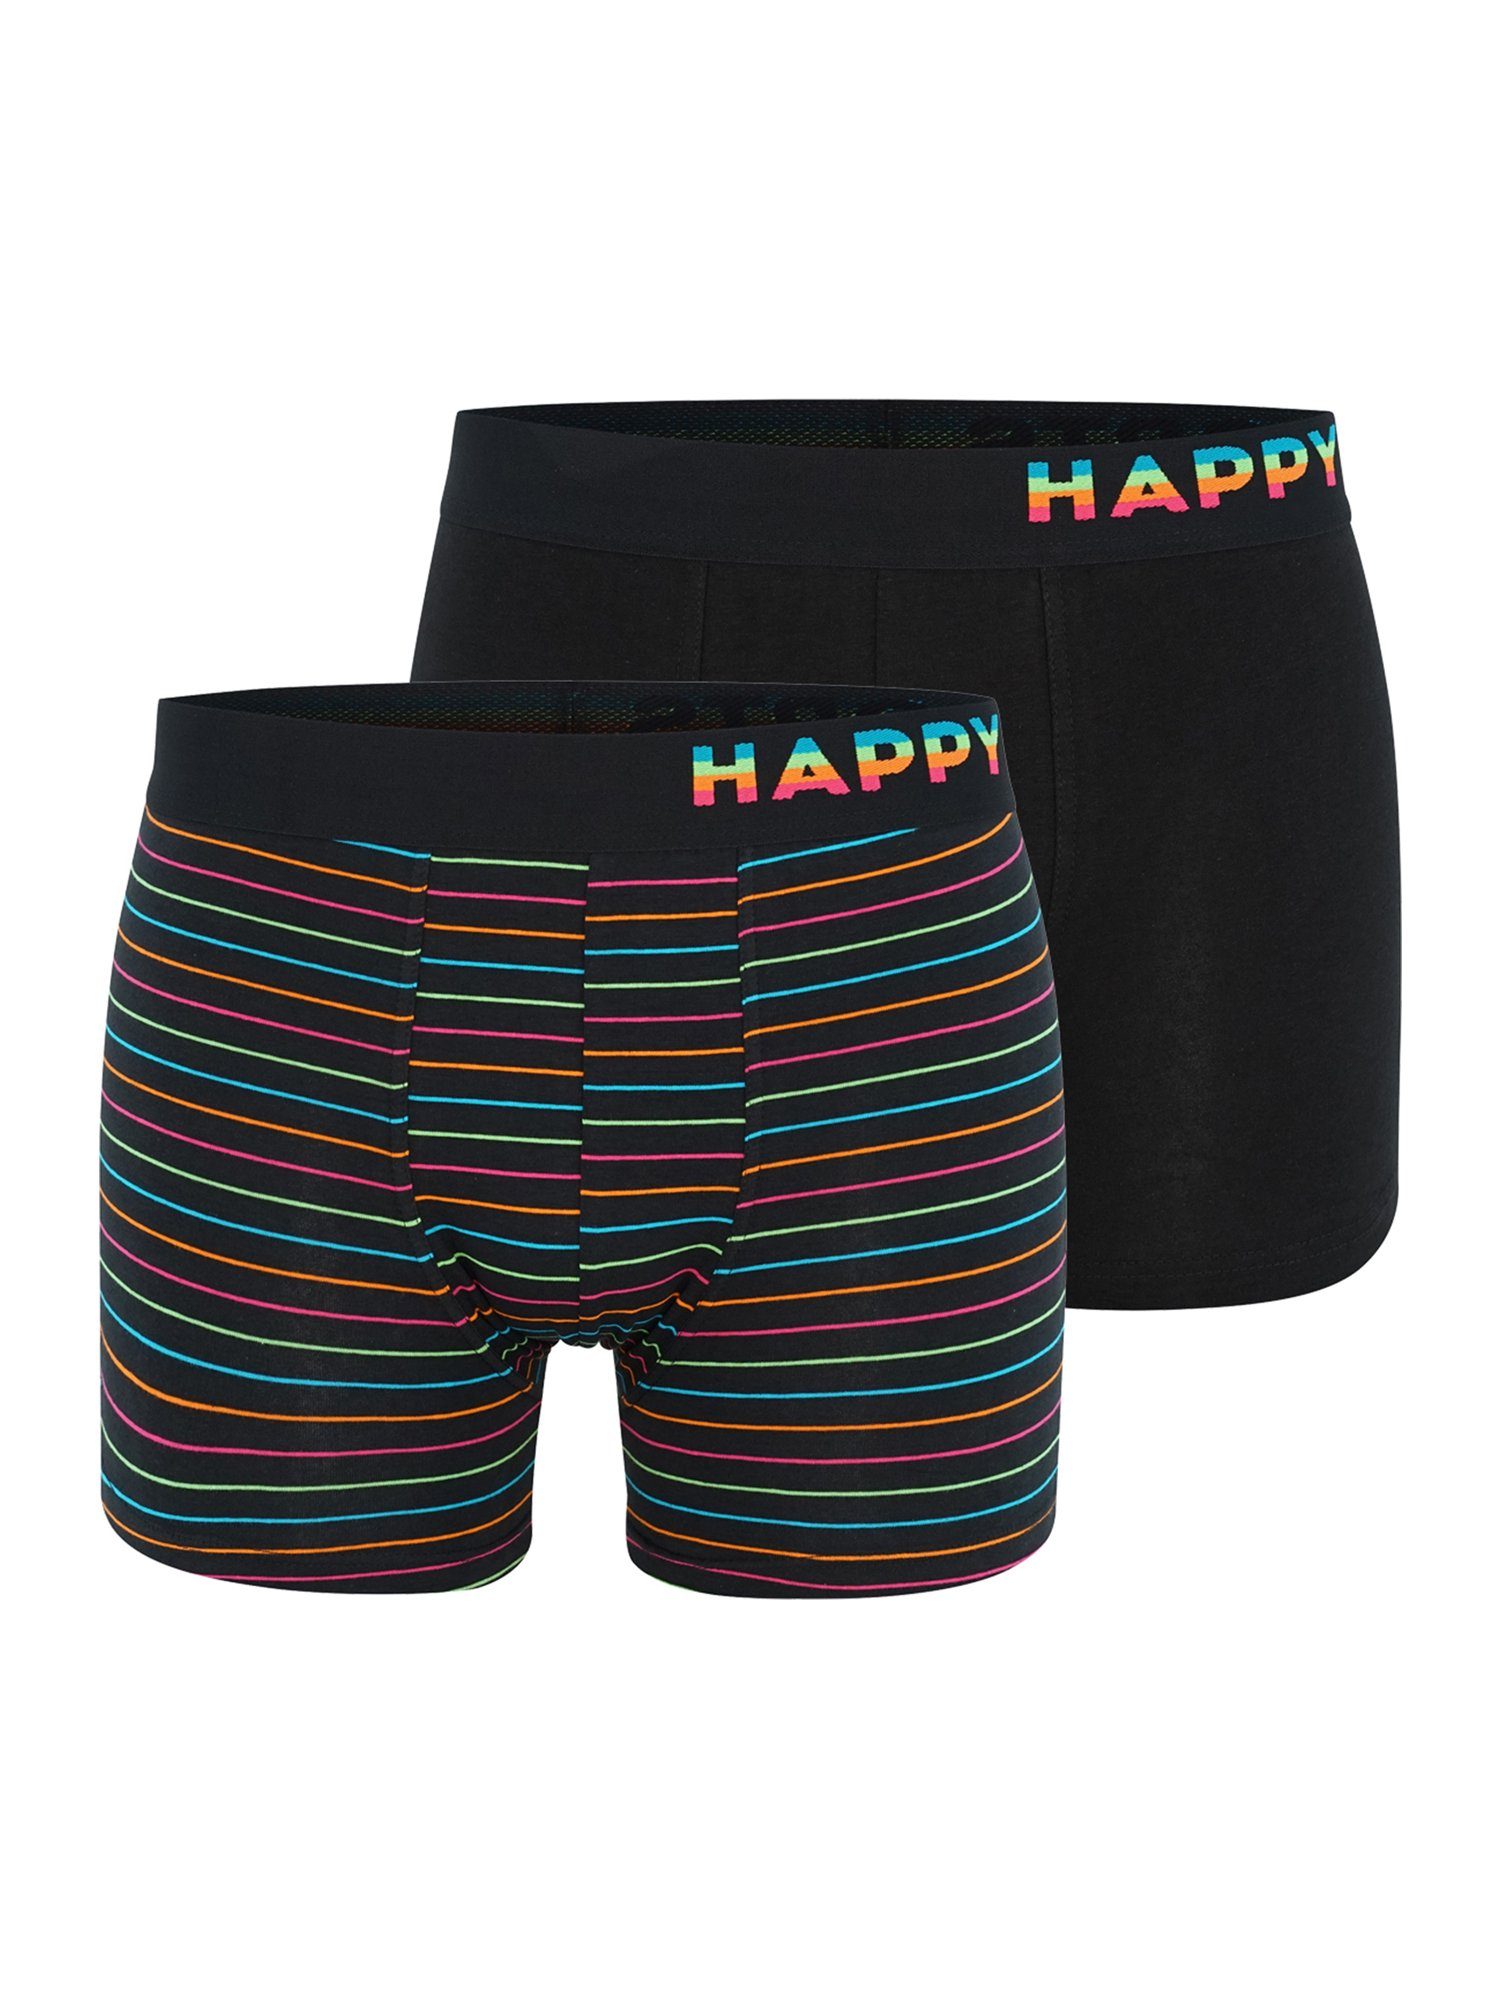 Rainbow Trunks Pants Motivprint Stripes Retro HAPPY SHORTS